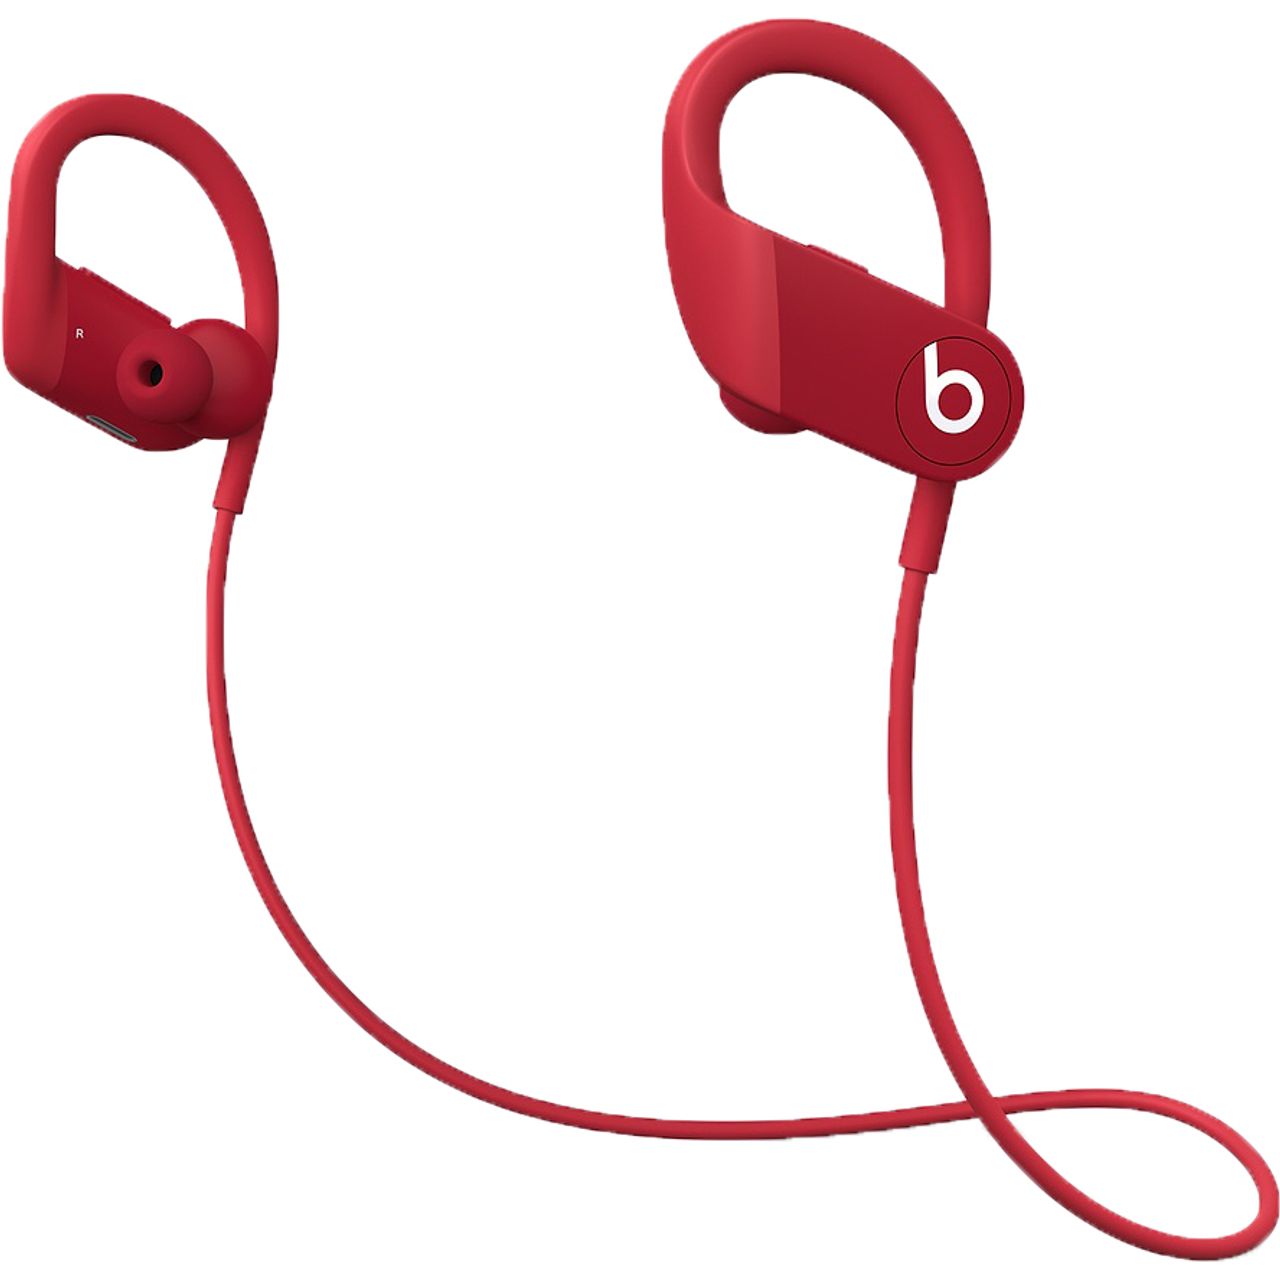 Powerbeats In-Ear Water Resistant Wireless Bluetooth Headphones Review